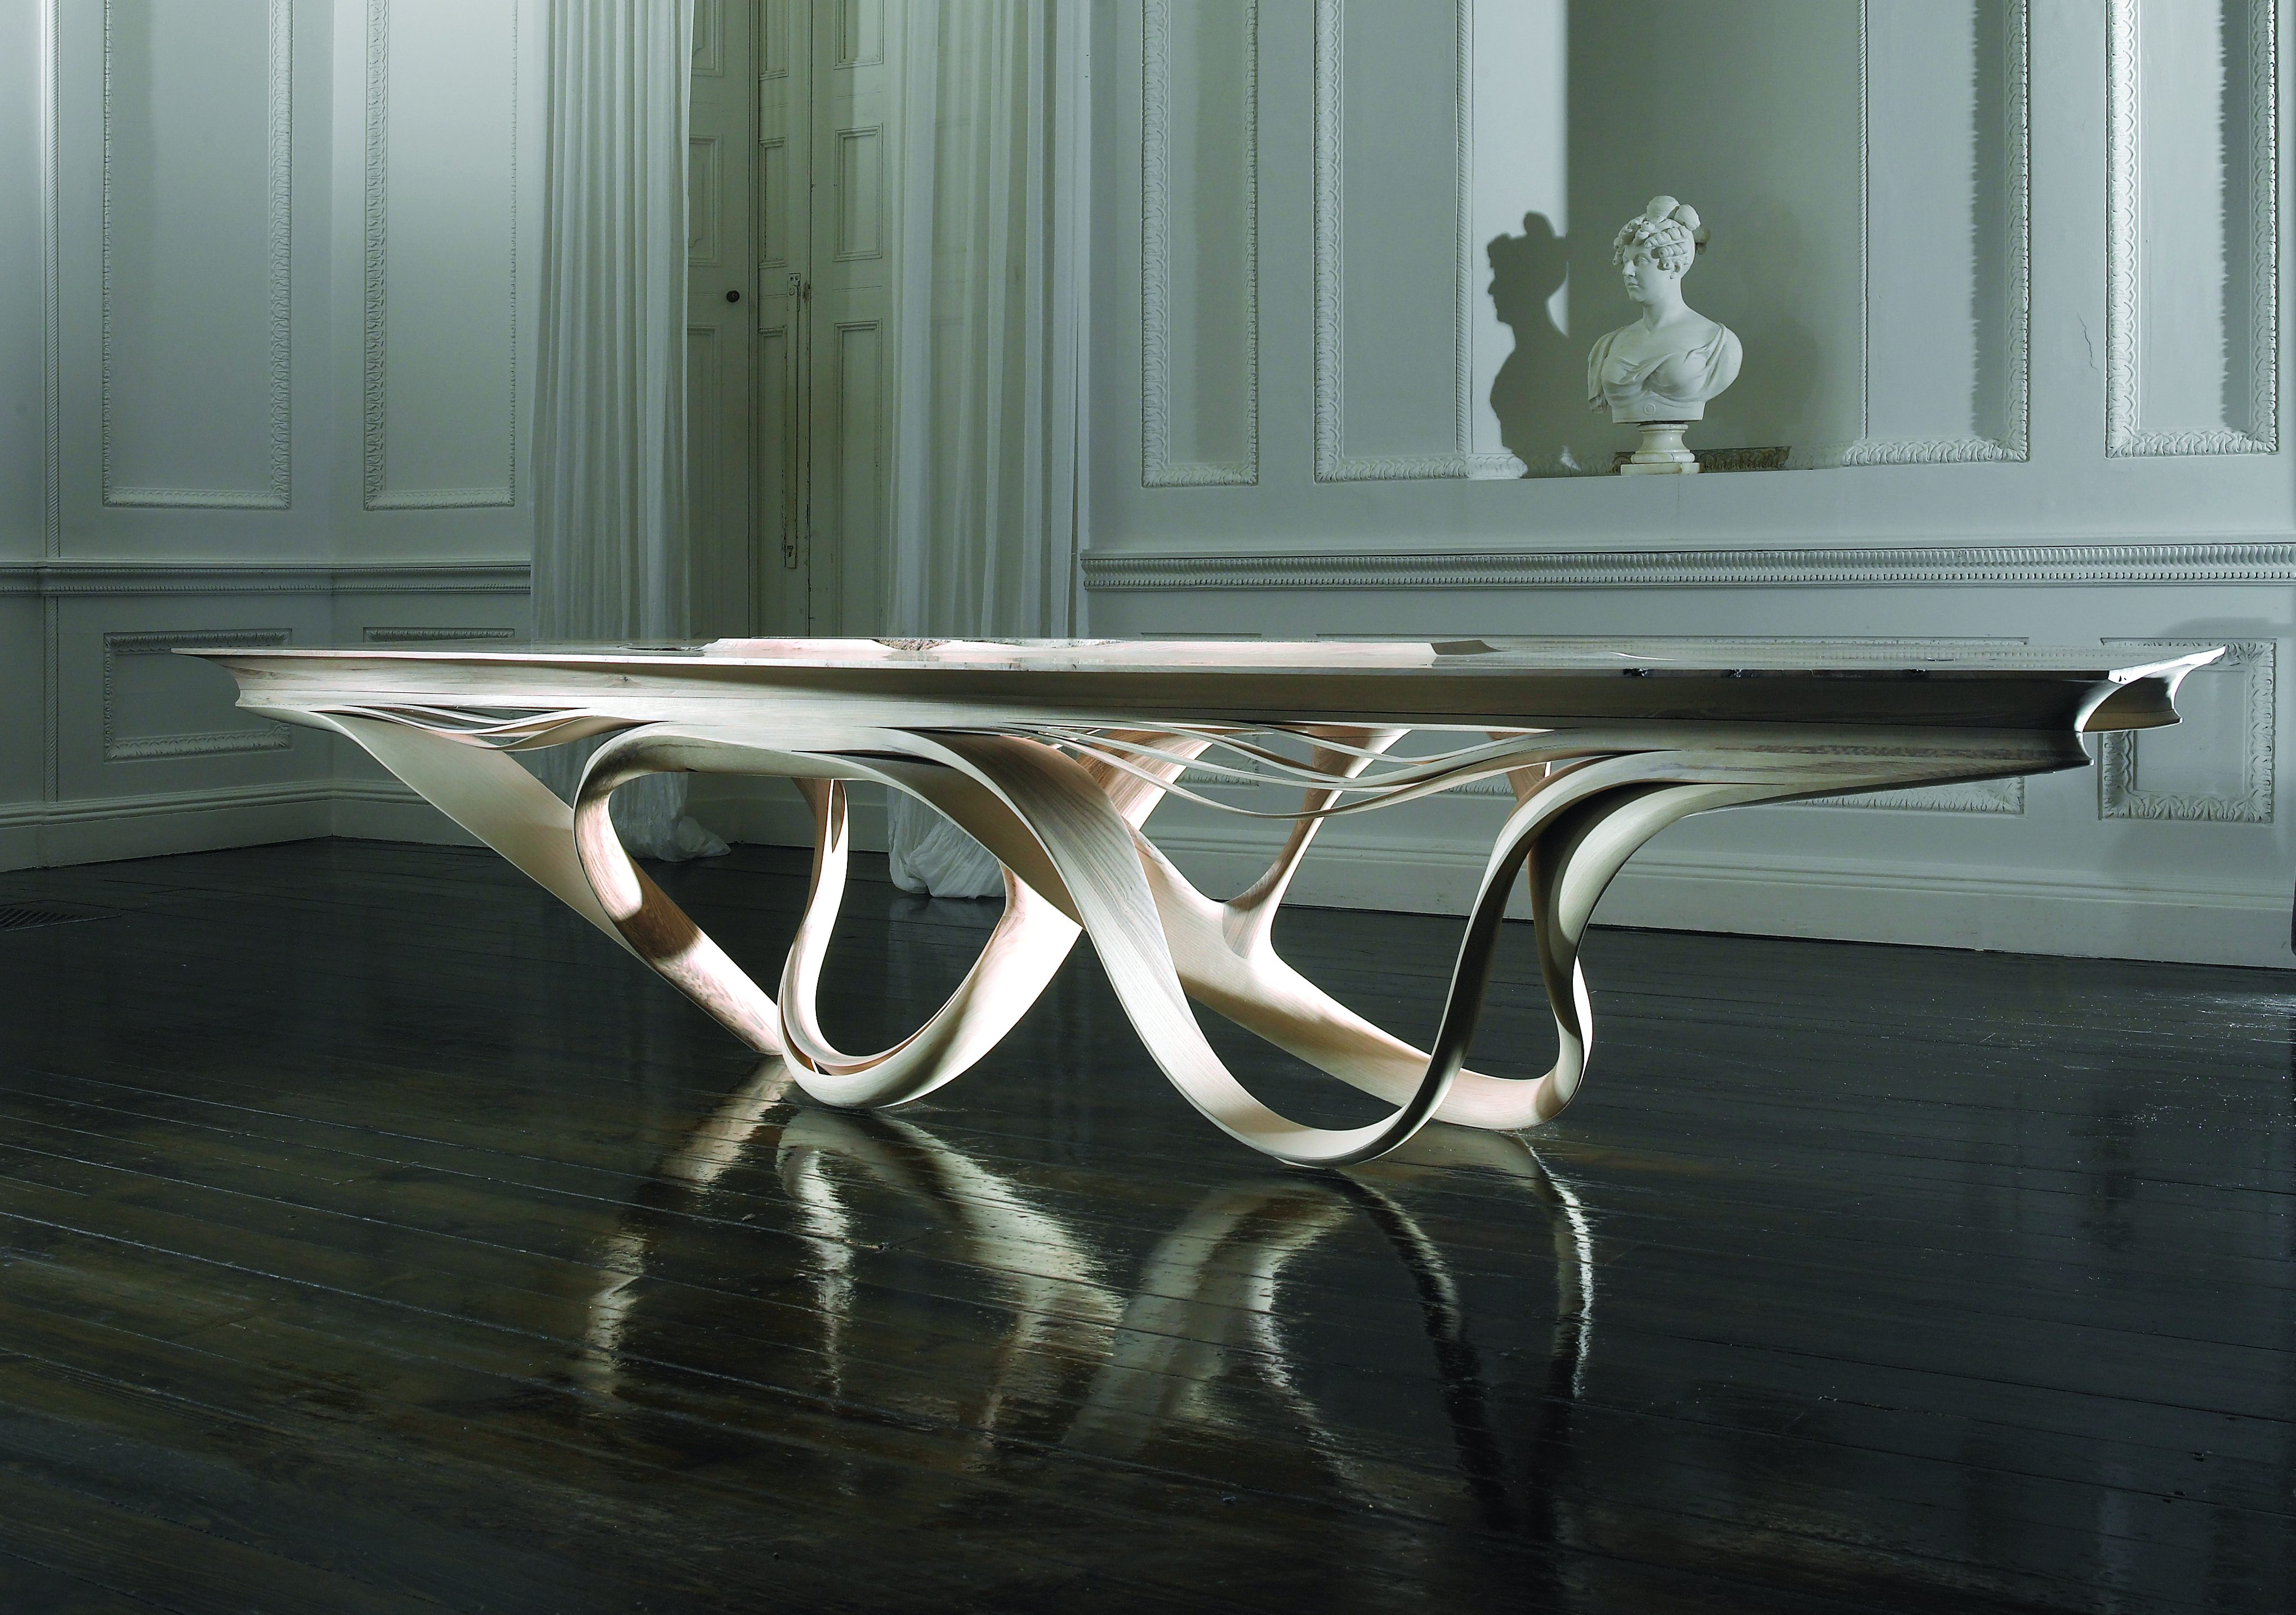 Joseph Walsh’s Enignum II Dining Table, 2010, at PAD London Art + Design.